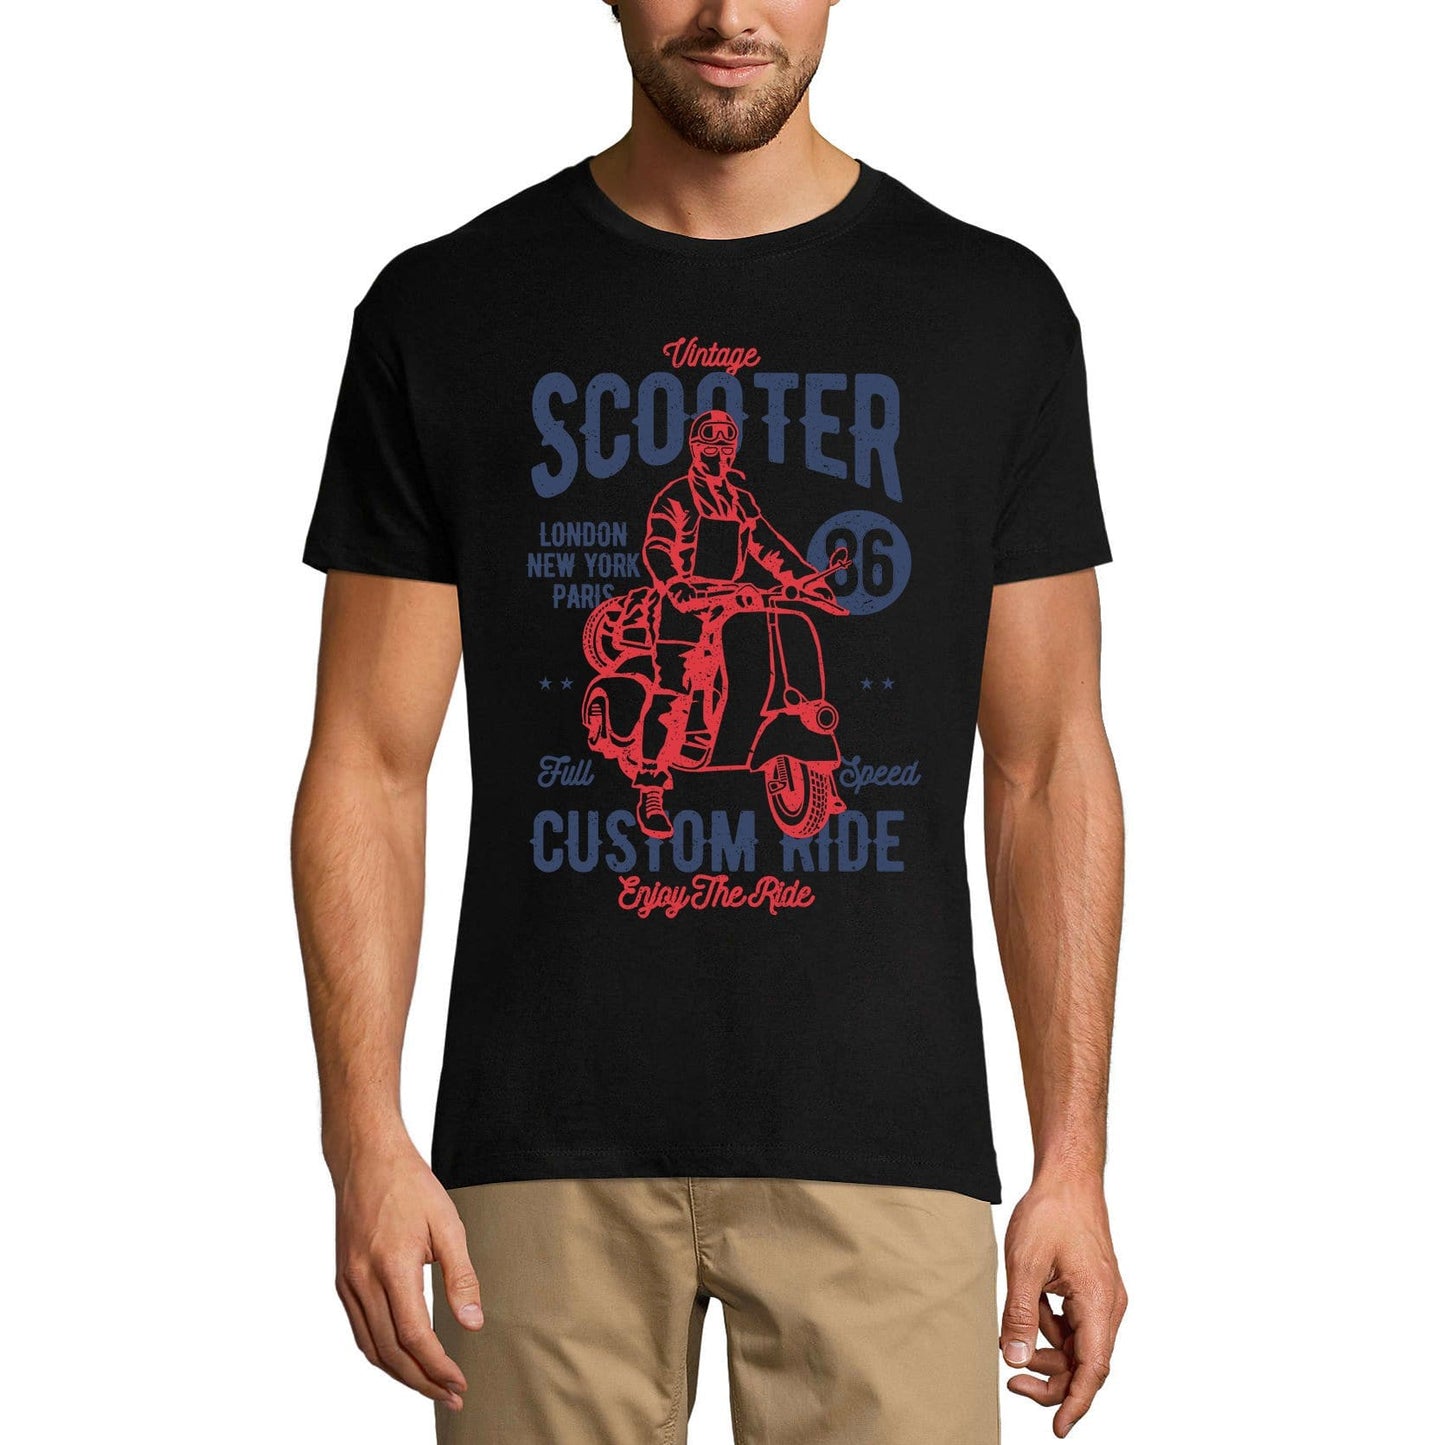 ULTRABASIC Men's Graphic T-Shirt Vintage Scooter - Custom Ride Tee Shirt